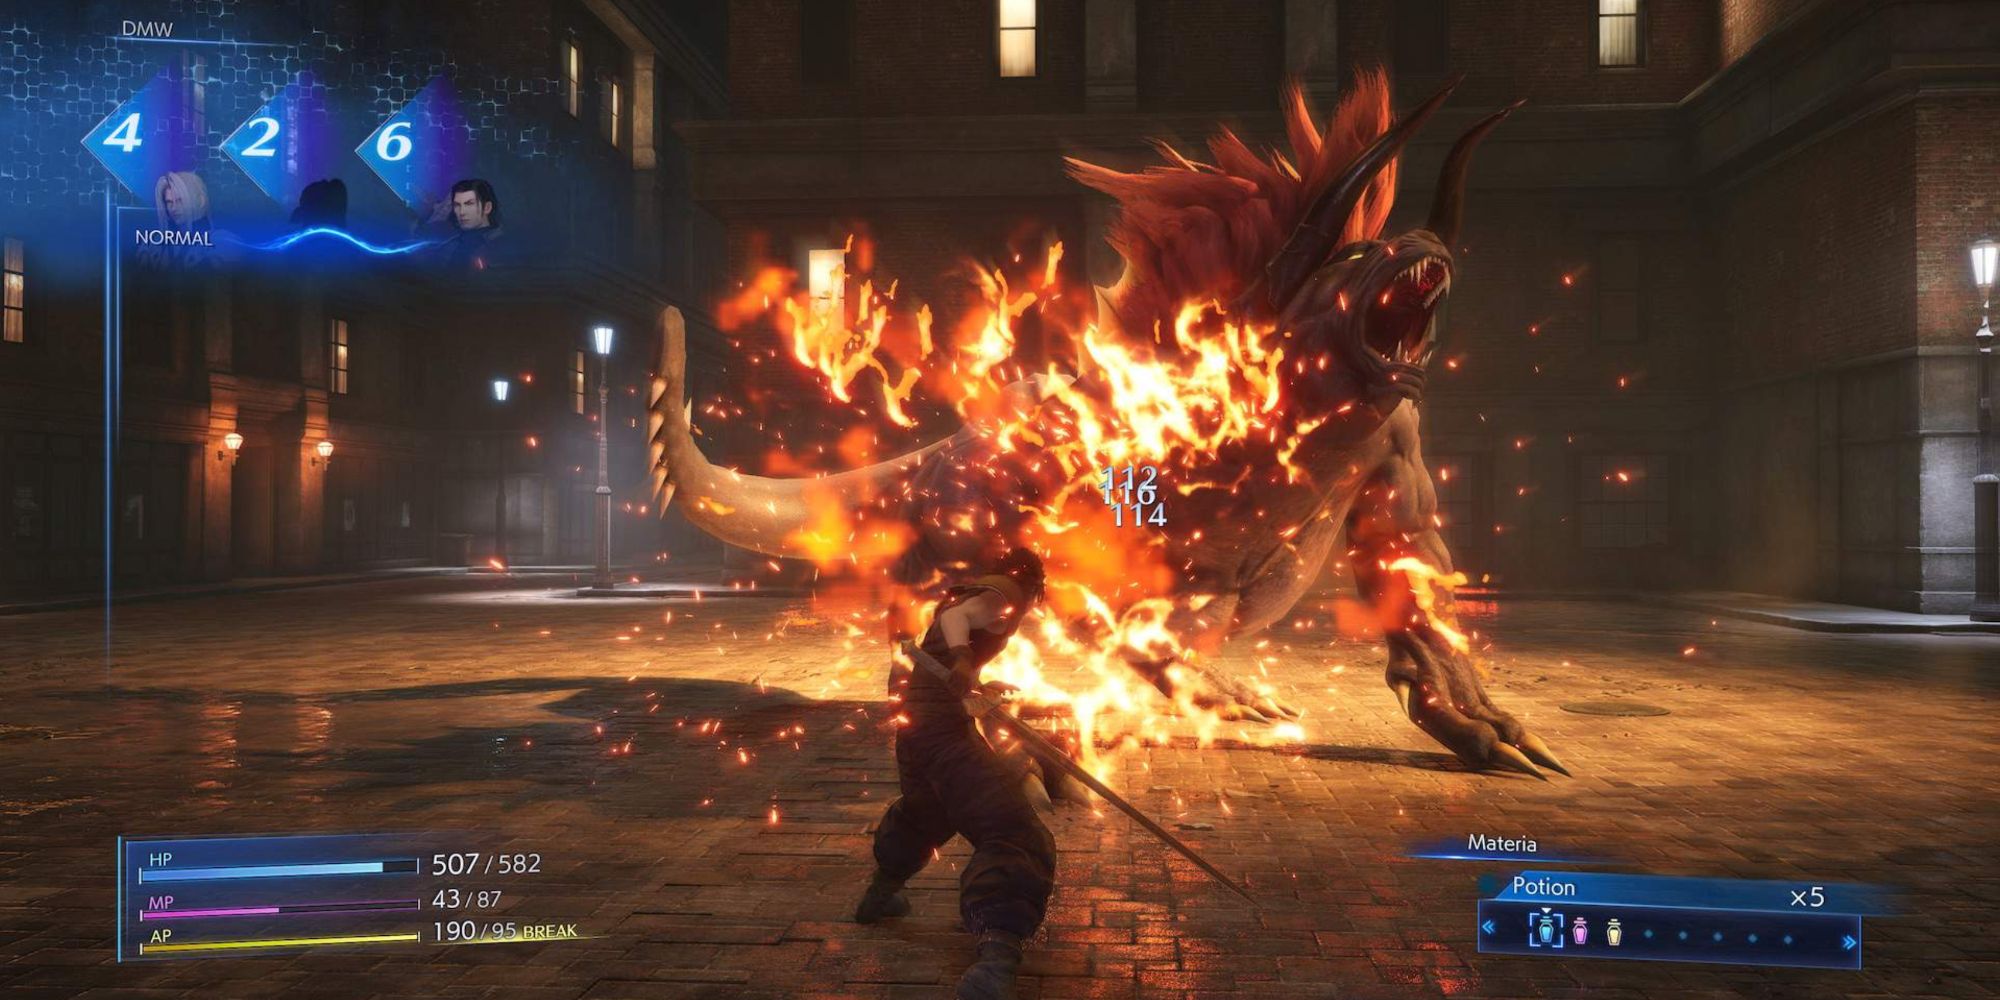 Screenshot of the Combat System featuring Zack Fair battling an Experiment in Crisis Core: Final Fantasy 7 Reunion